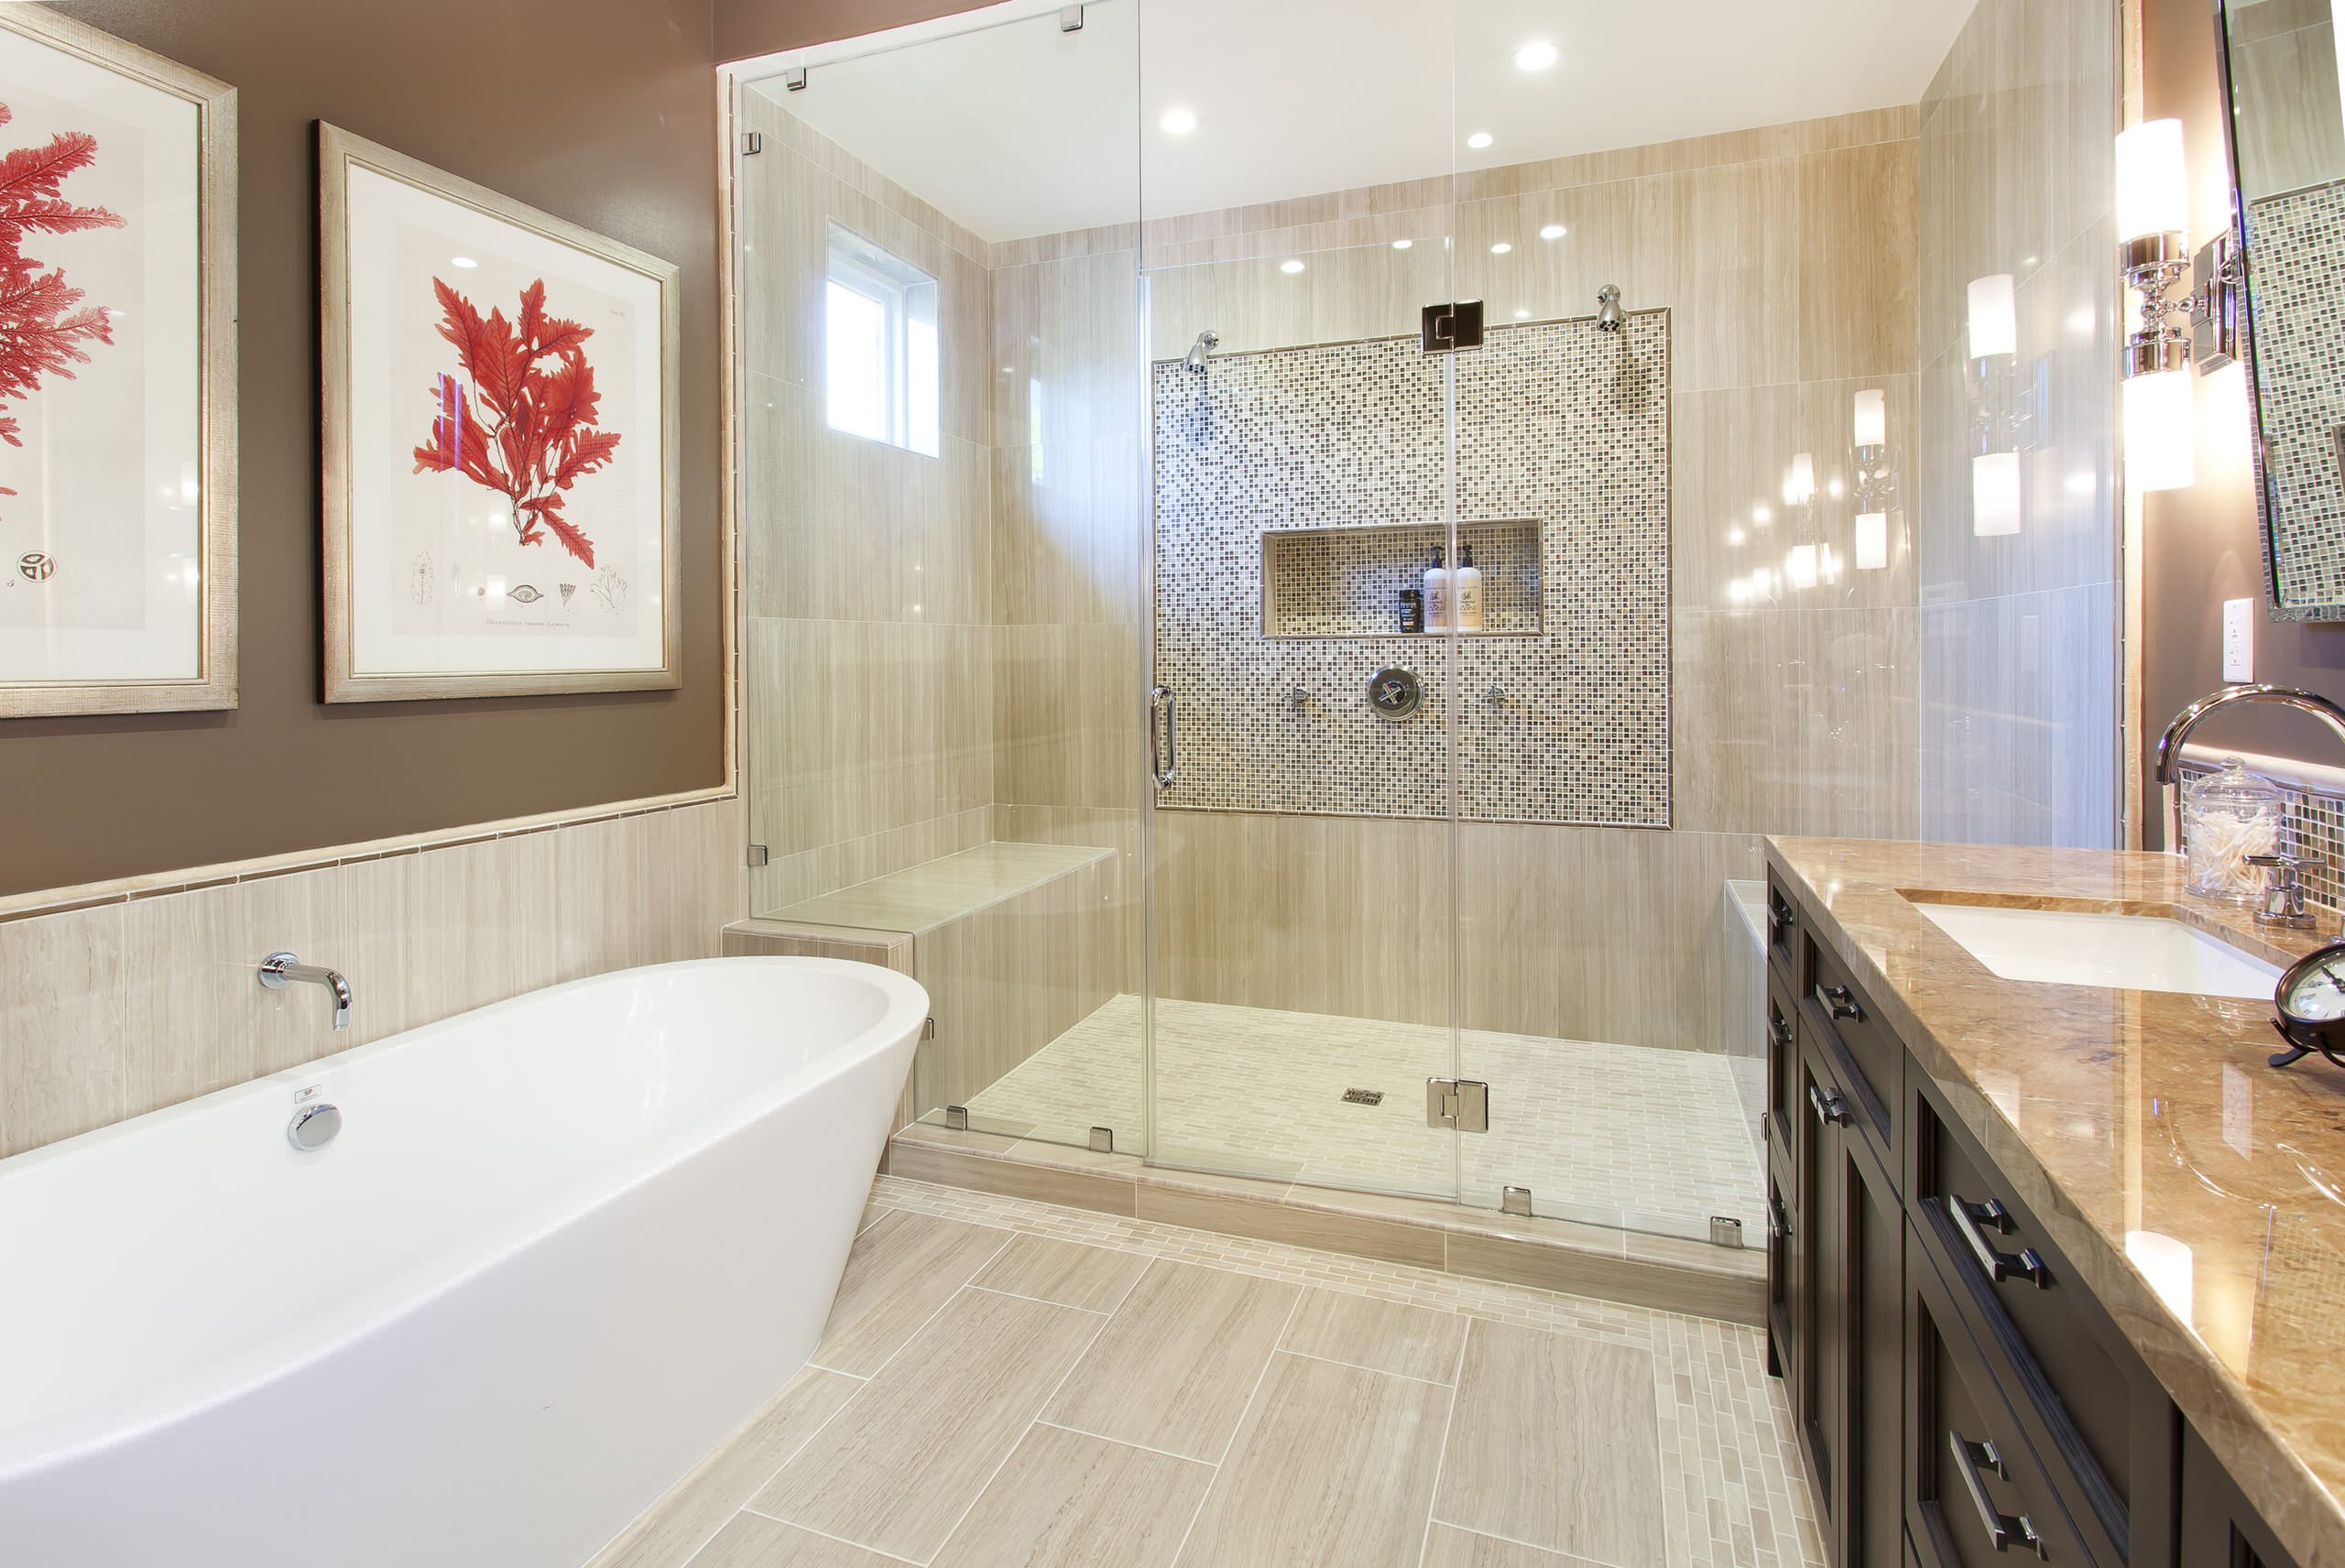 Bathroom Design 10x10 Bathroom Floor Plans - Home Architec Ideas